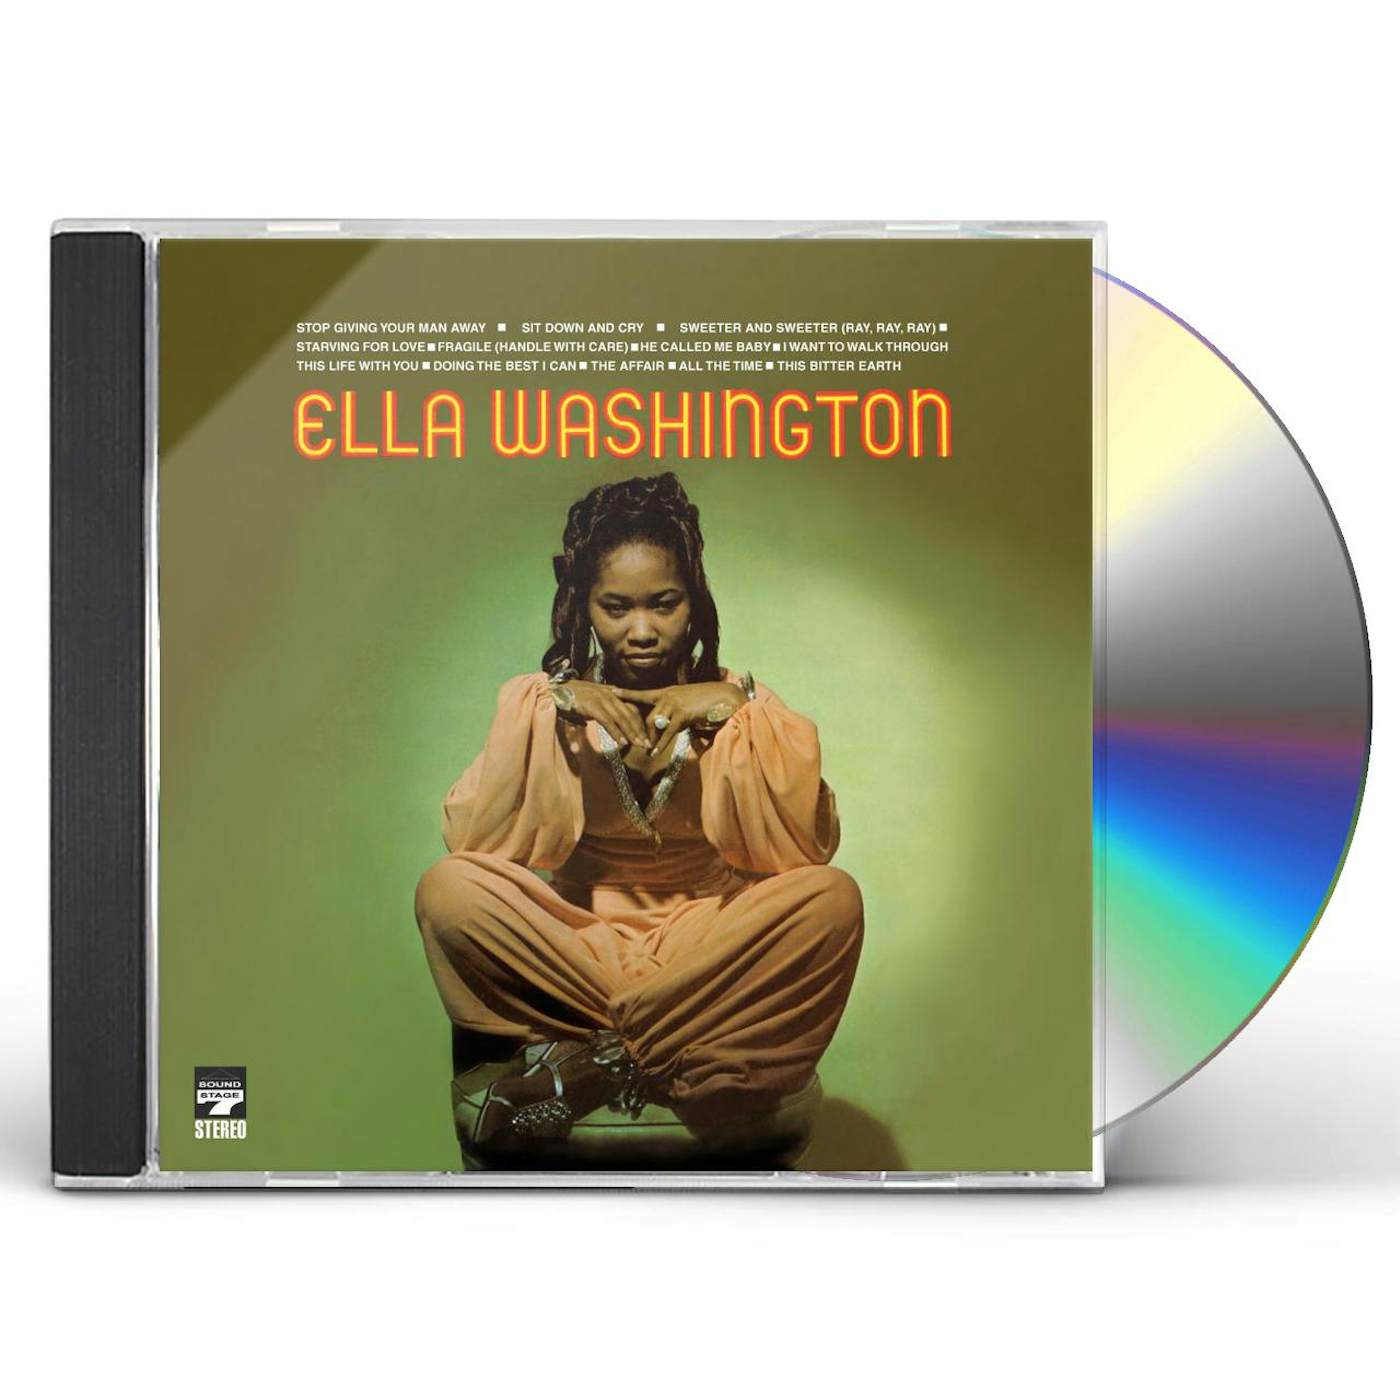 ELLA WASHINGTON CD